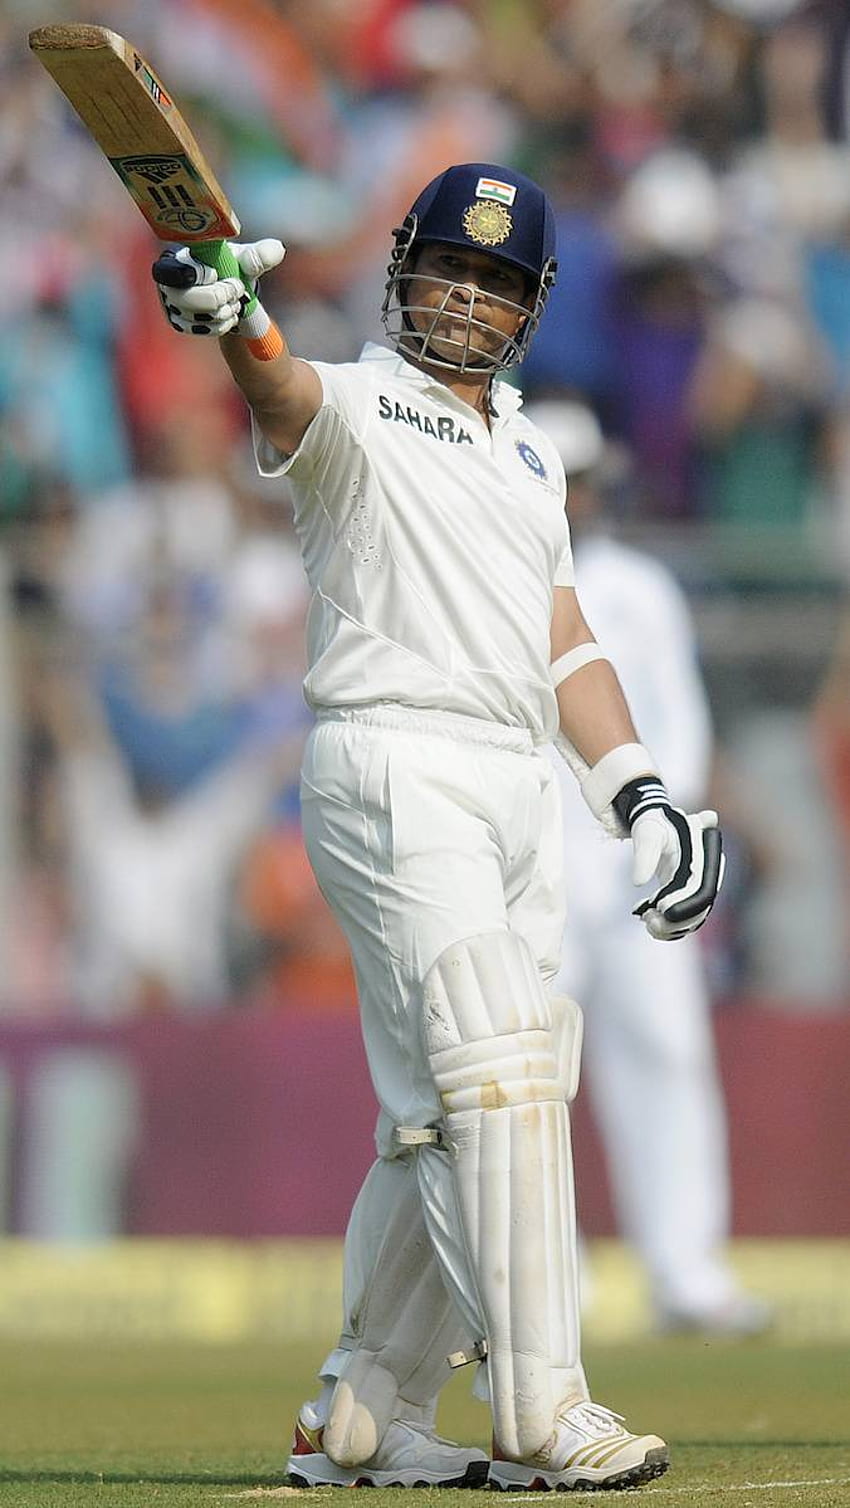 Sachin Tendulkar eases India to victory over Sri Lanka | India cricket team  | The Guardian